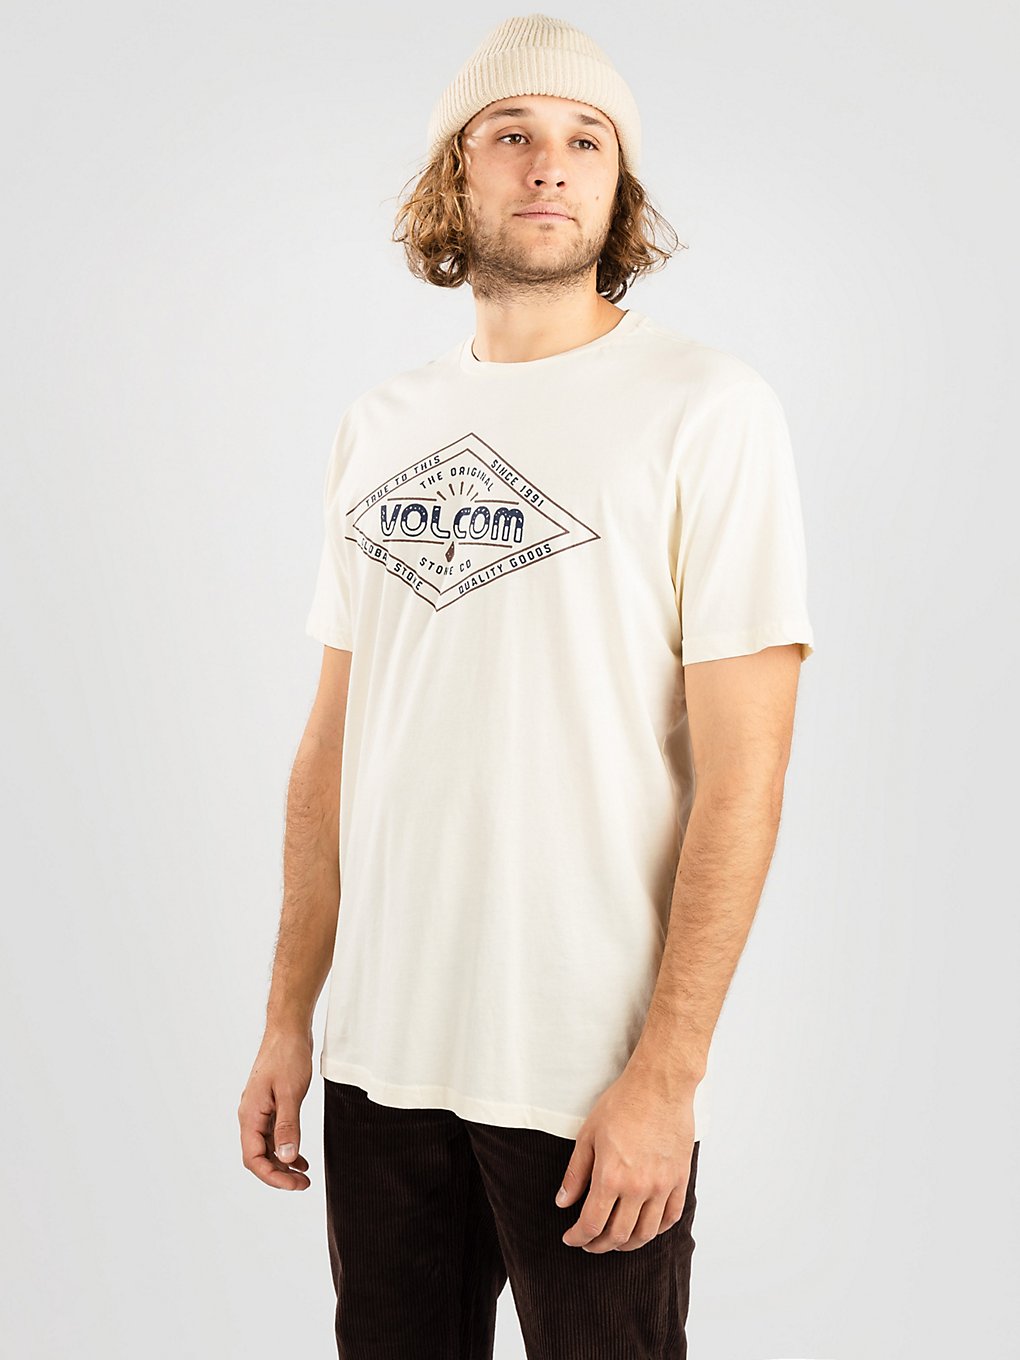 Volcom Hikendo Fty T-Shirt off white kaufen